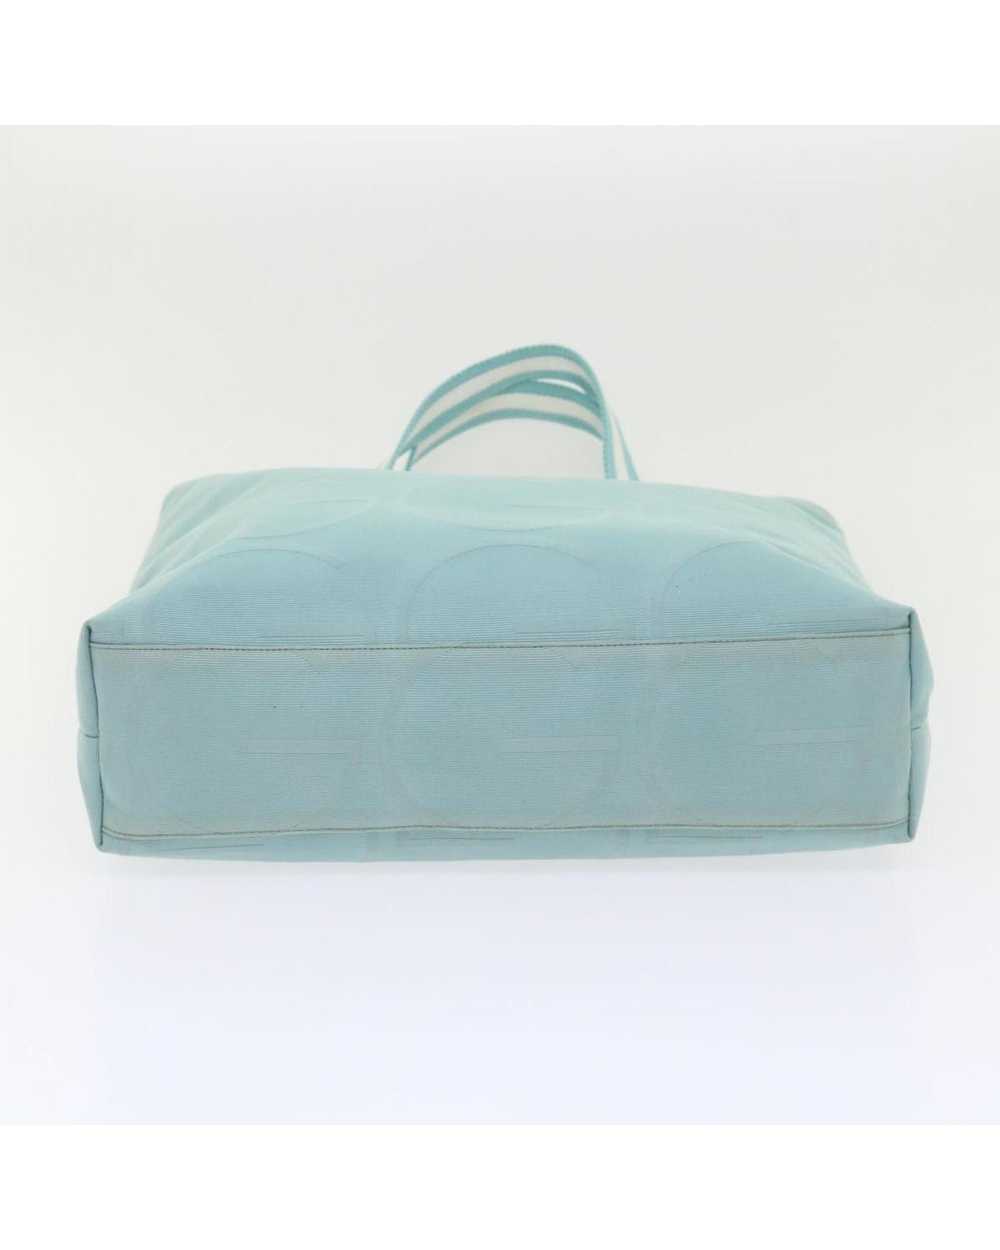 Gucci Blue Canvas Gucci Bag - Practical and Elega… - image 8